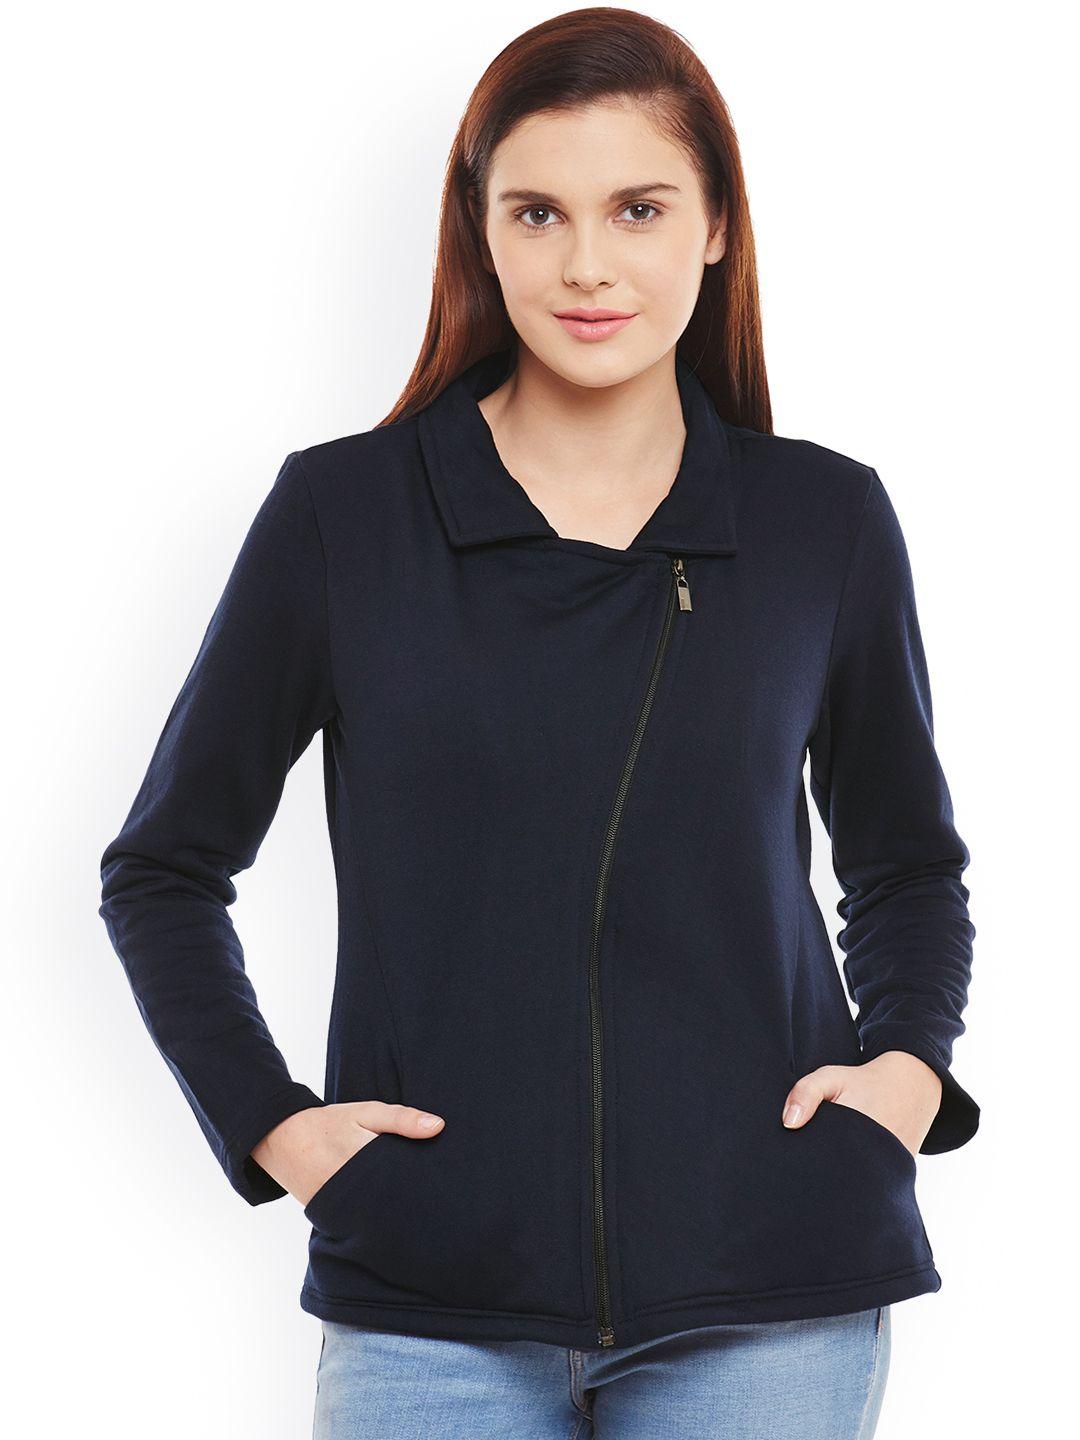 belle-fille-navy-standard-fit-tailored-jacket